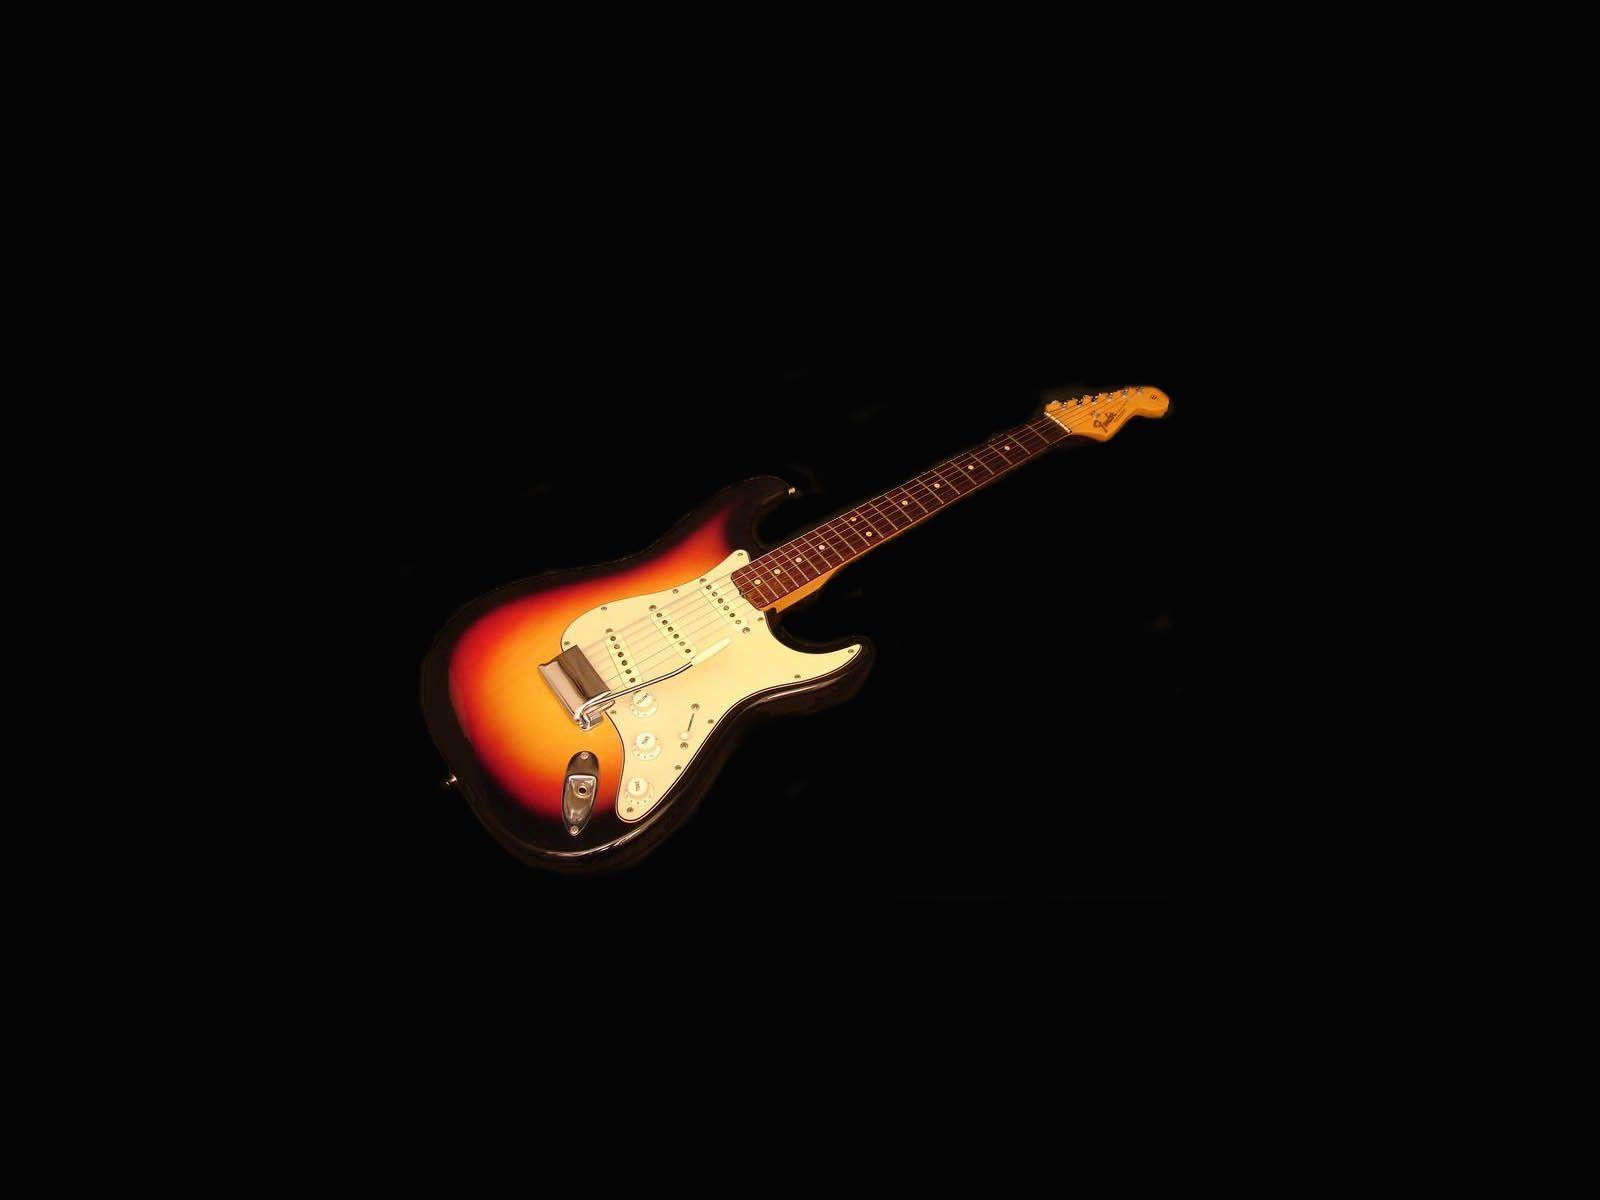 Guitar Fender Stratocaster Black Wallpaper HD Wallpaper